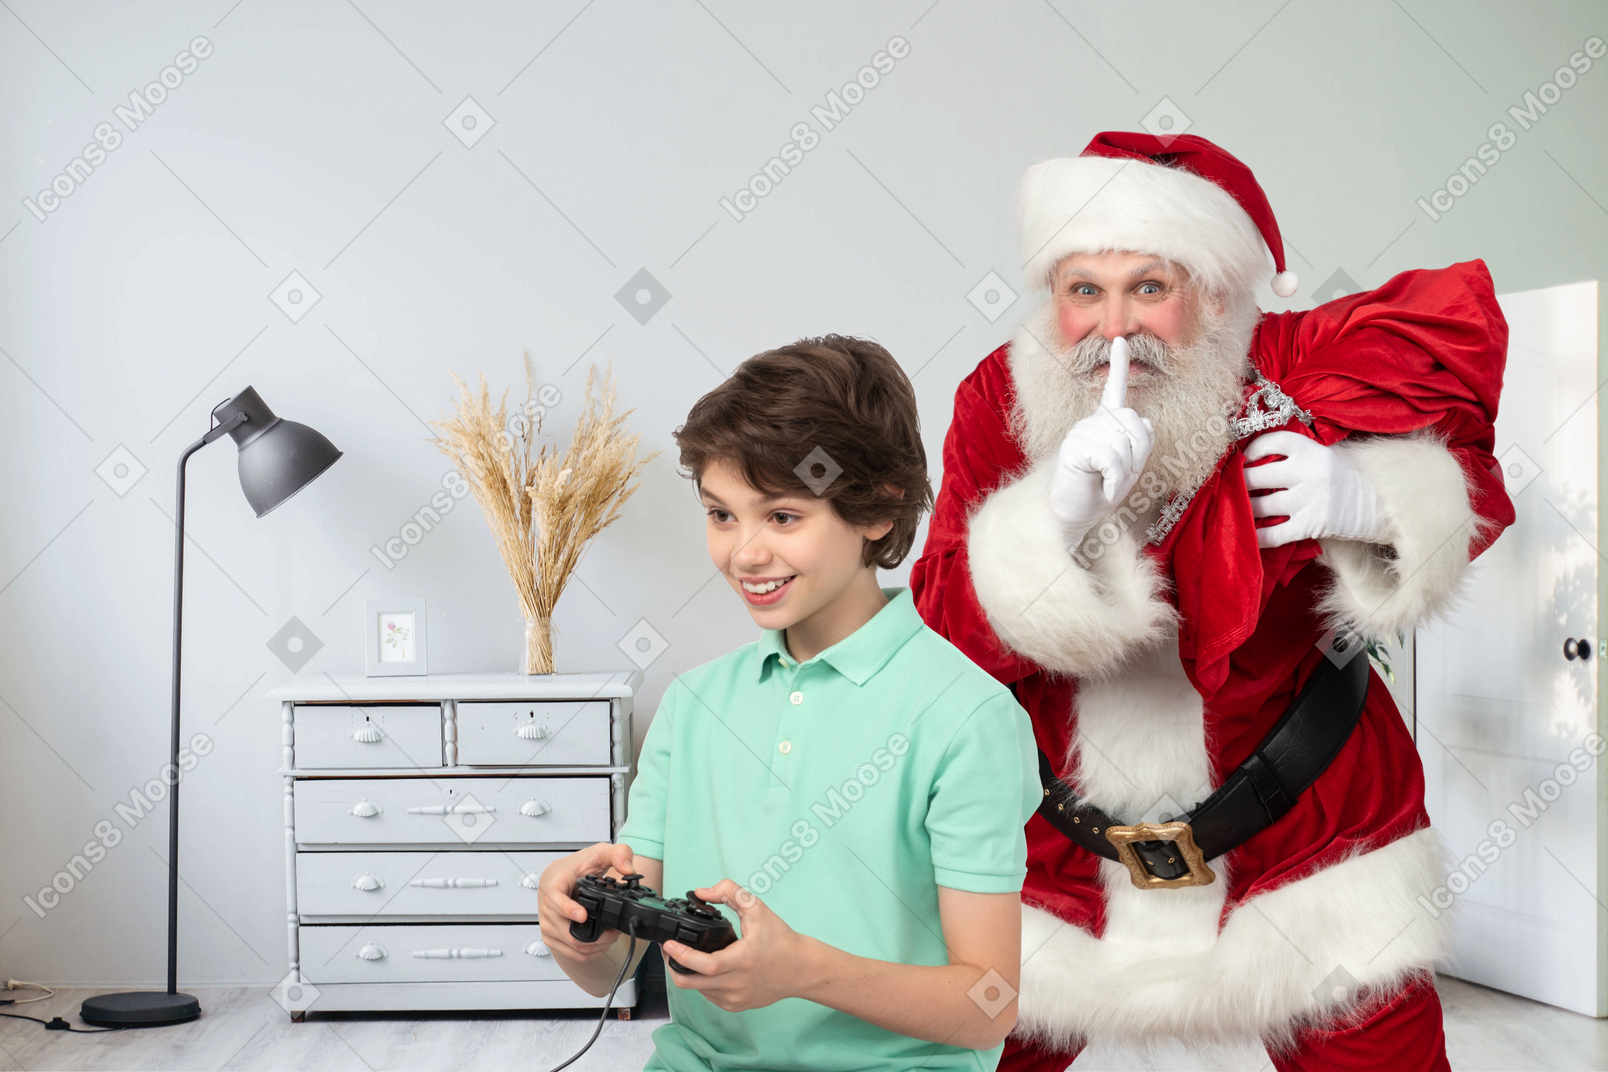 I heard that this boy didn't believe in santa